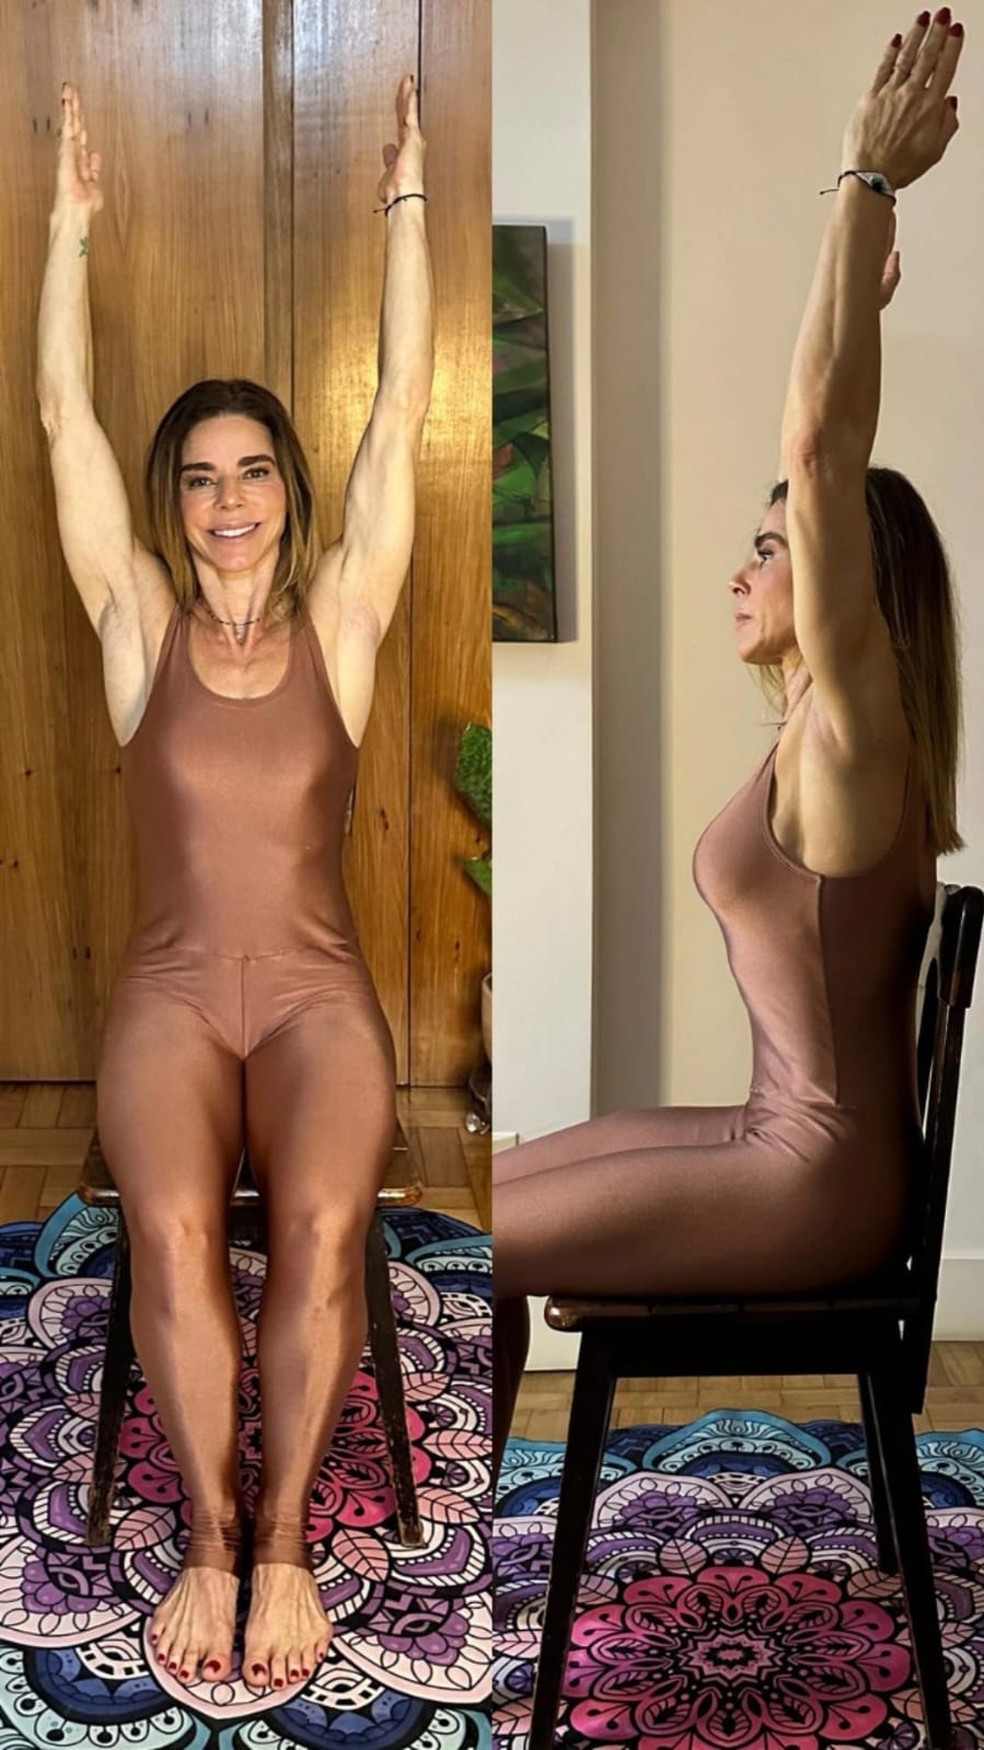 Adriana Jarva - Yoga Instructor - Sou Yoga